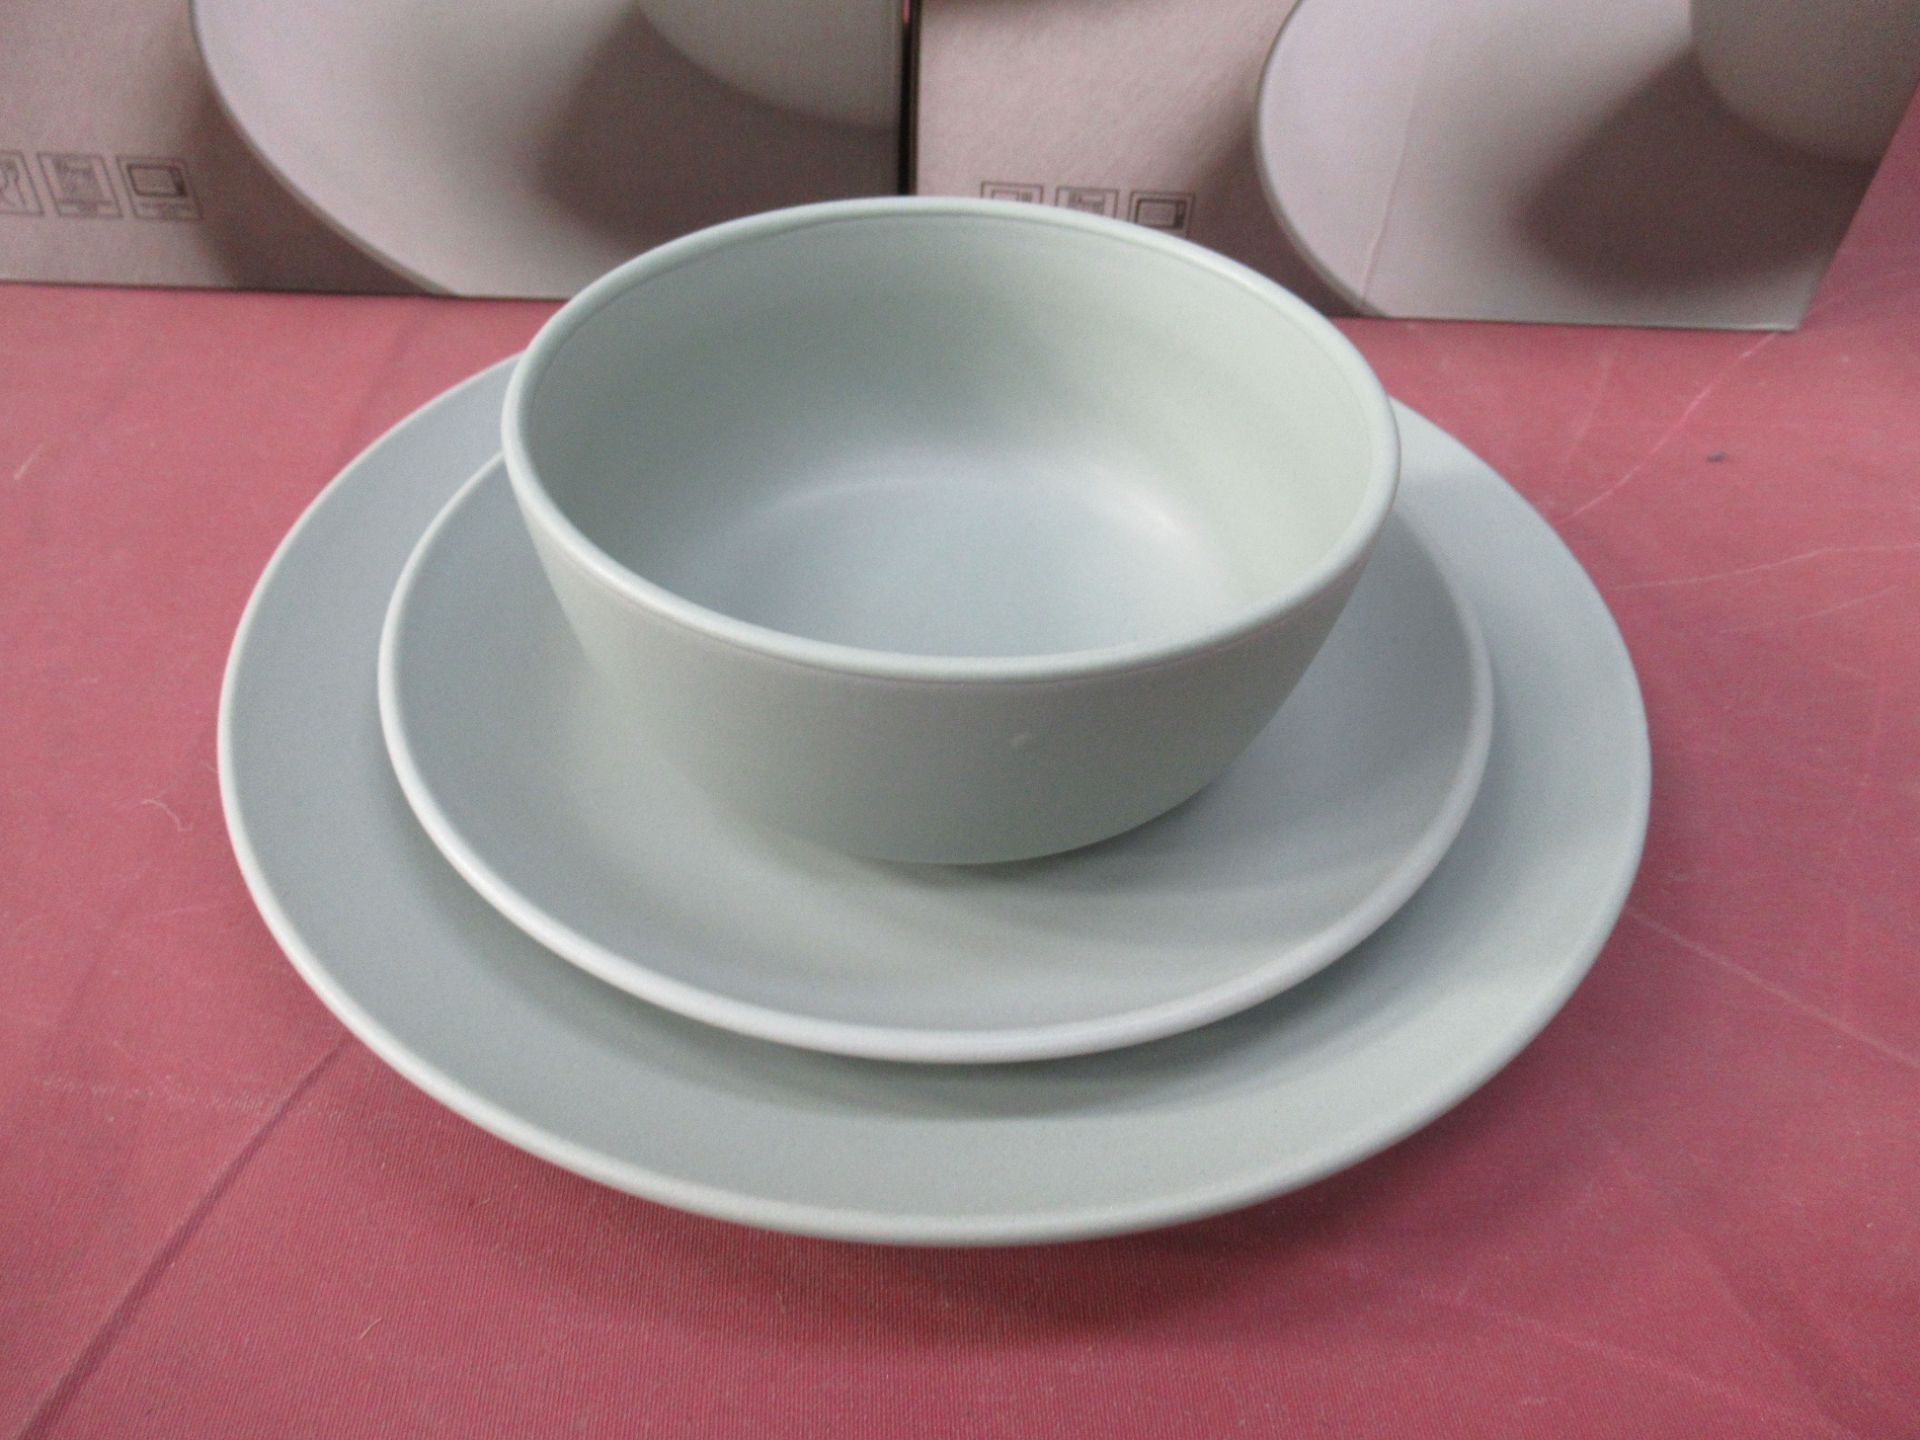 3x Sabichi Stoneware 12-Piece Dinner Sets - Image 2 of 2